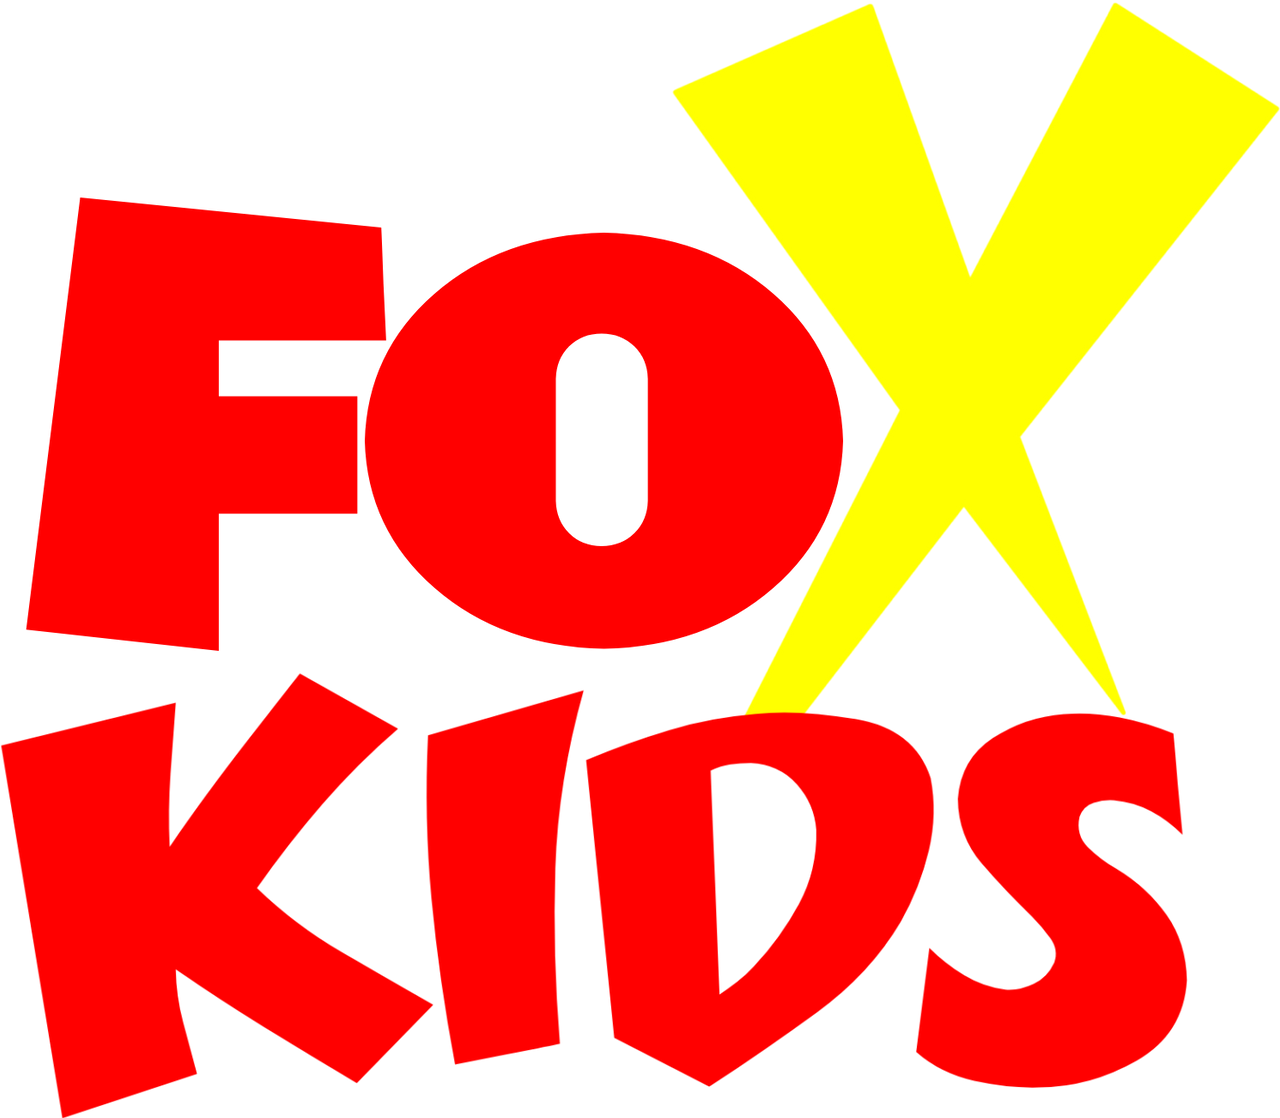 What If?: Fox Kids (My AU) 2009-2013 by Carxl2029 on DeviantArt